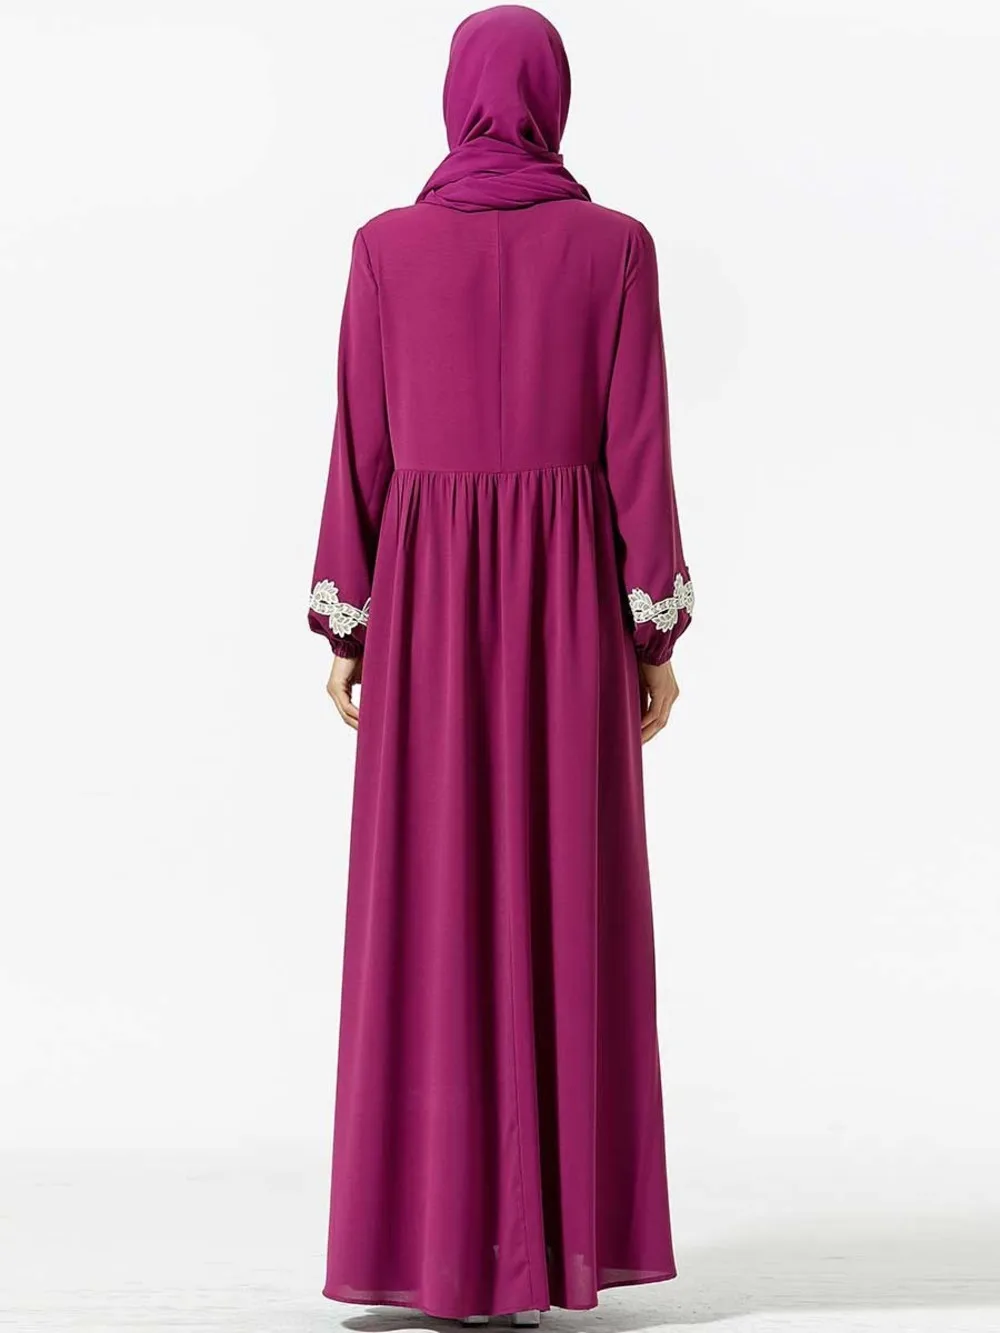 New Elegant Turkish Dress Designers Muslim Evening Vestidos For Lovers No Headscarf | Тематическая одежда и униформа